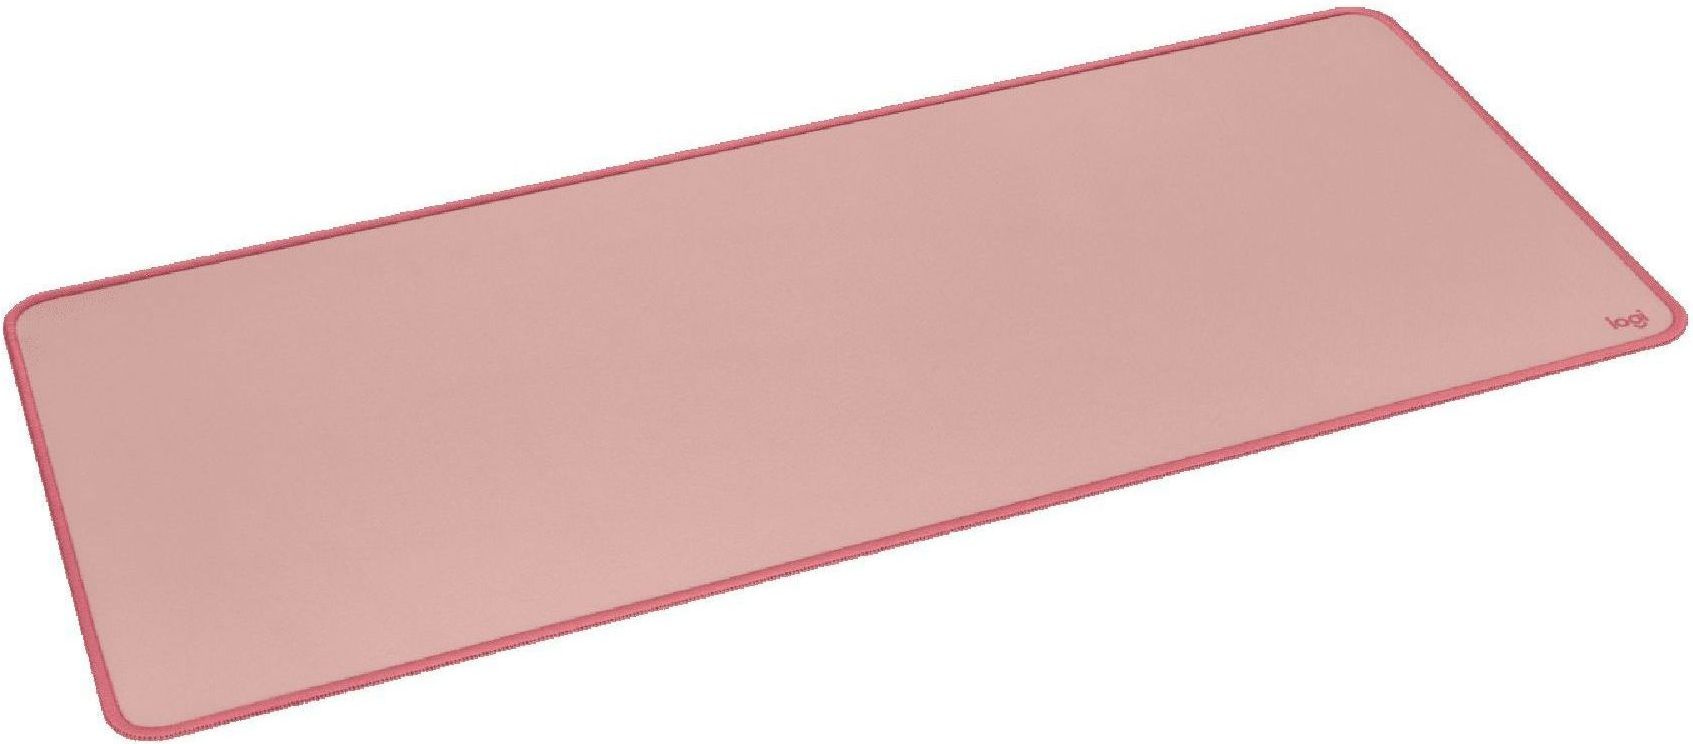 Коврик для мыши Logitech Studio Desk Mat Средний розовый 700x300x2мм